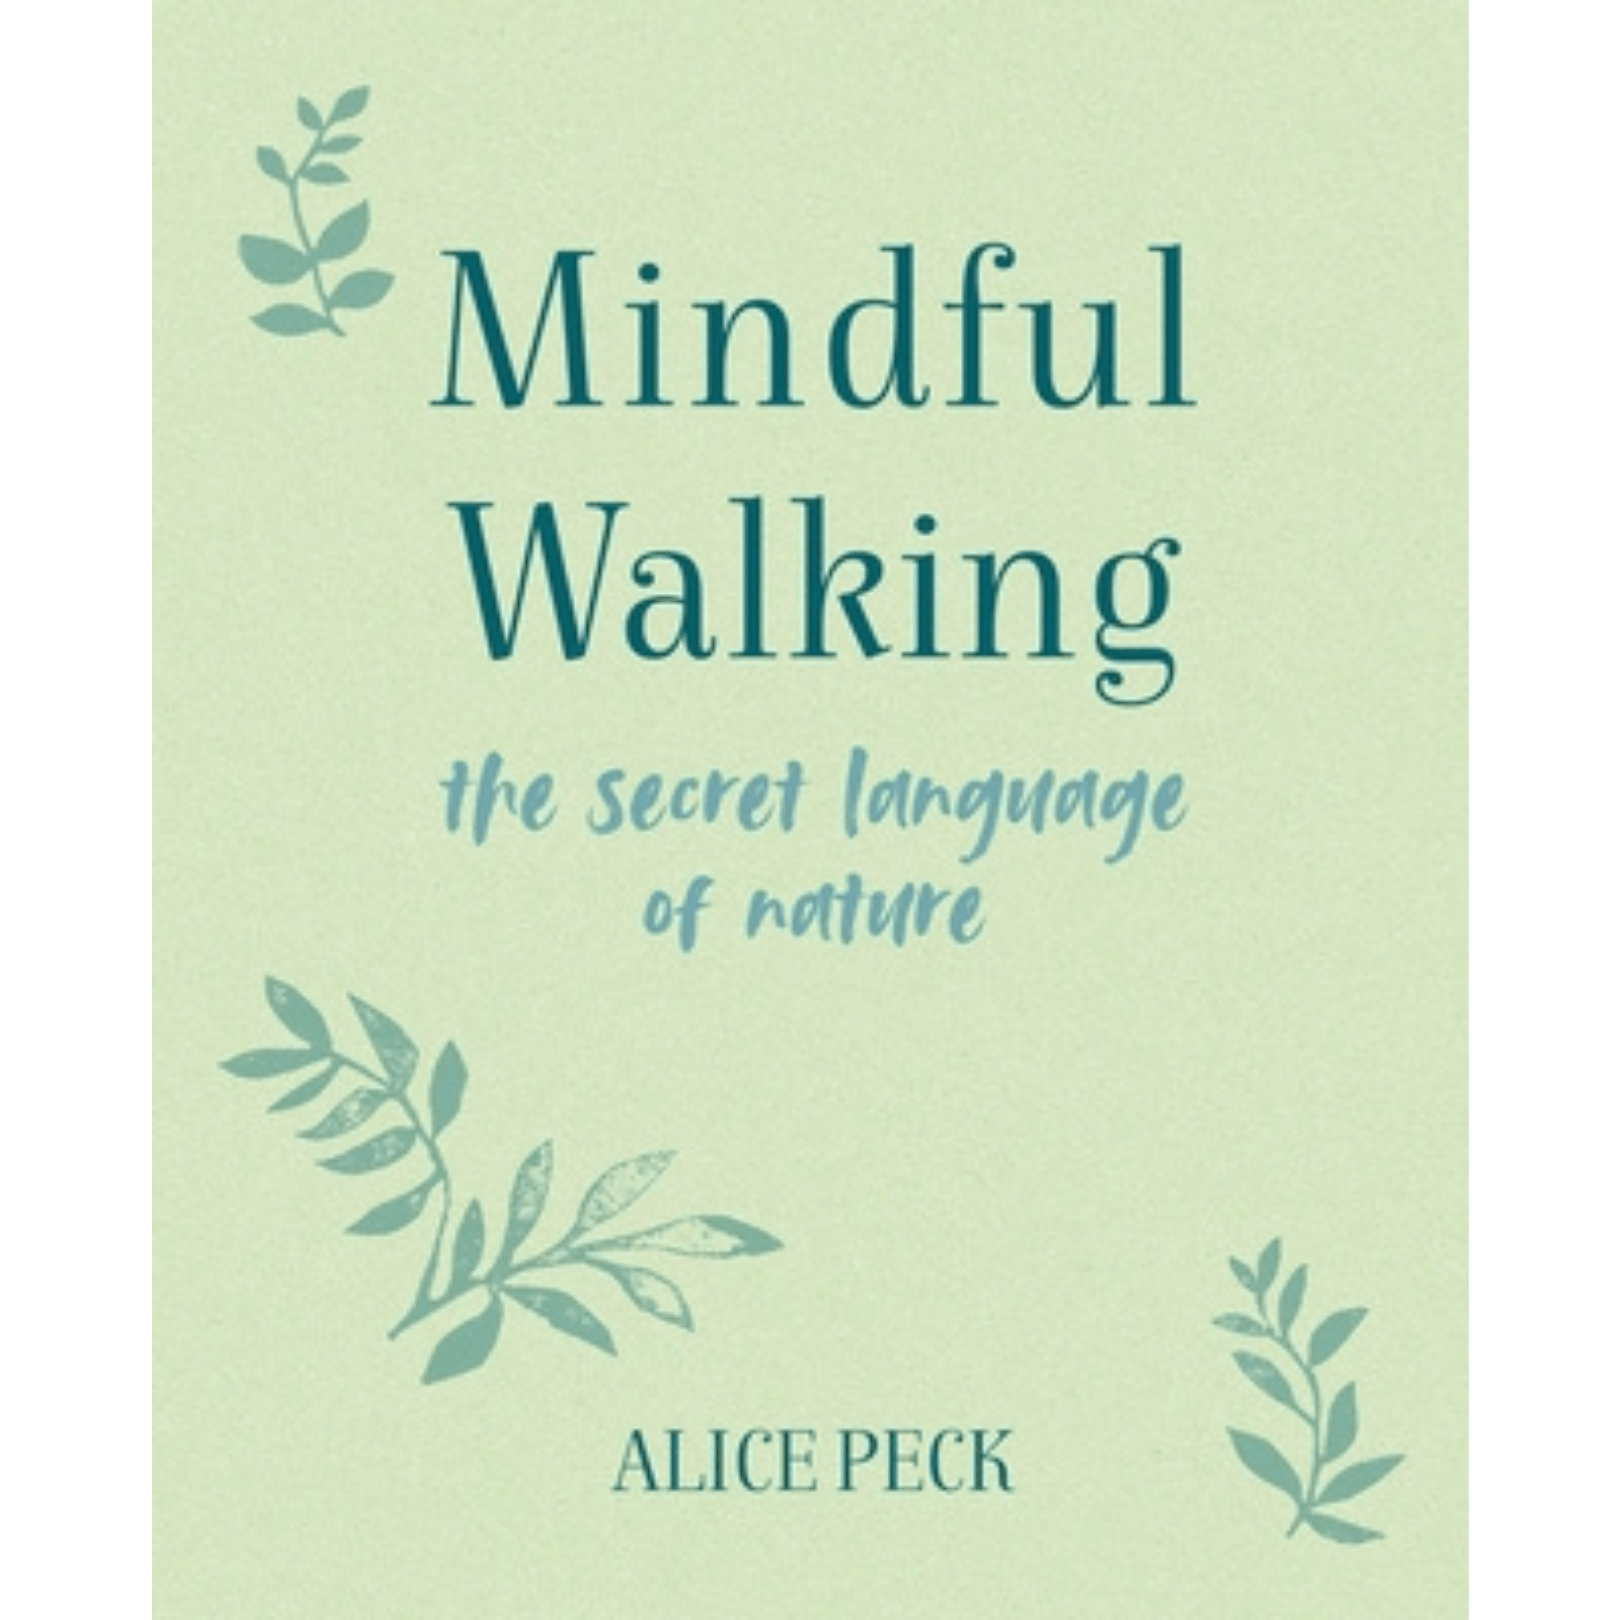 Mindful Walking: The Secret Language of Nature